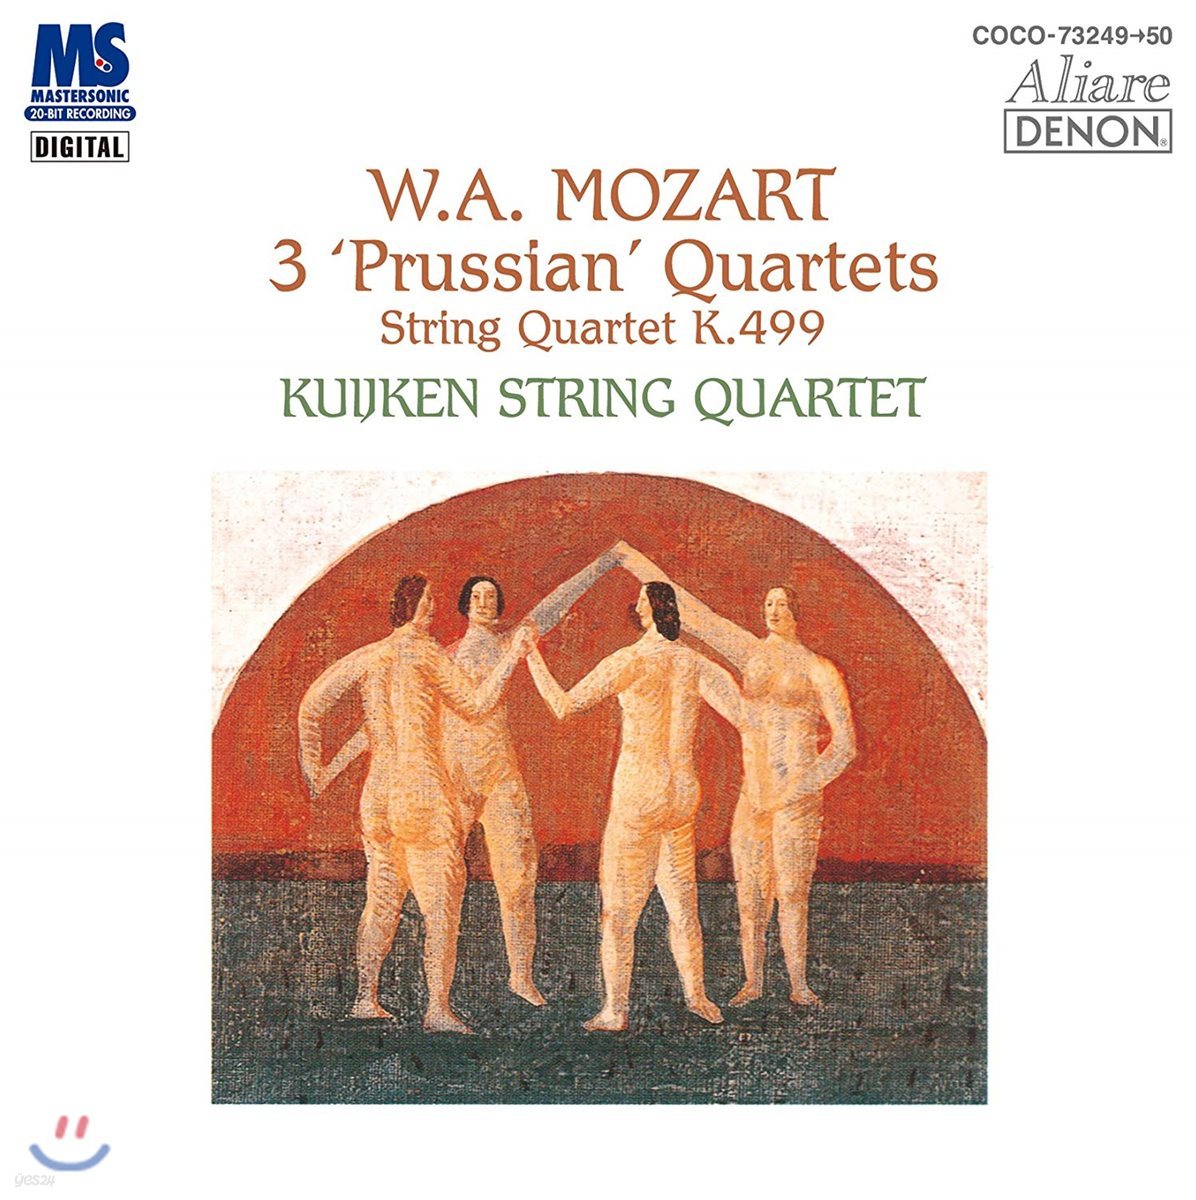 Kuijken String Quartet  모차르트: 3개의 프러시안 4중주, 현악 4중주 20번 (Mozart: 3 Prussian Quartets, String Quartet K 499)